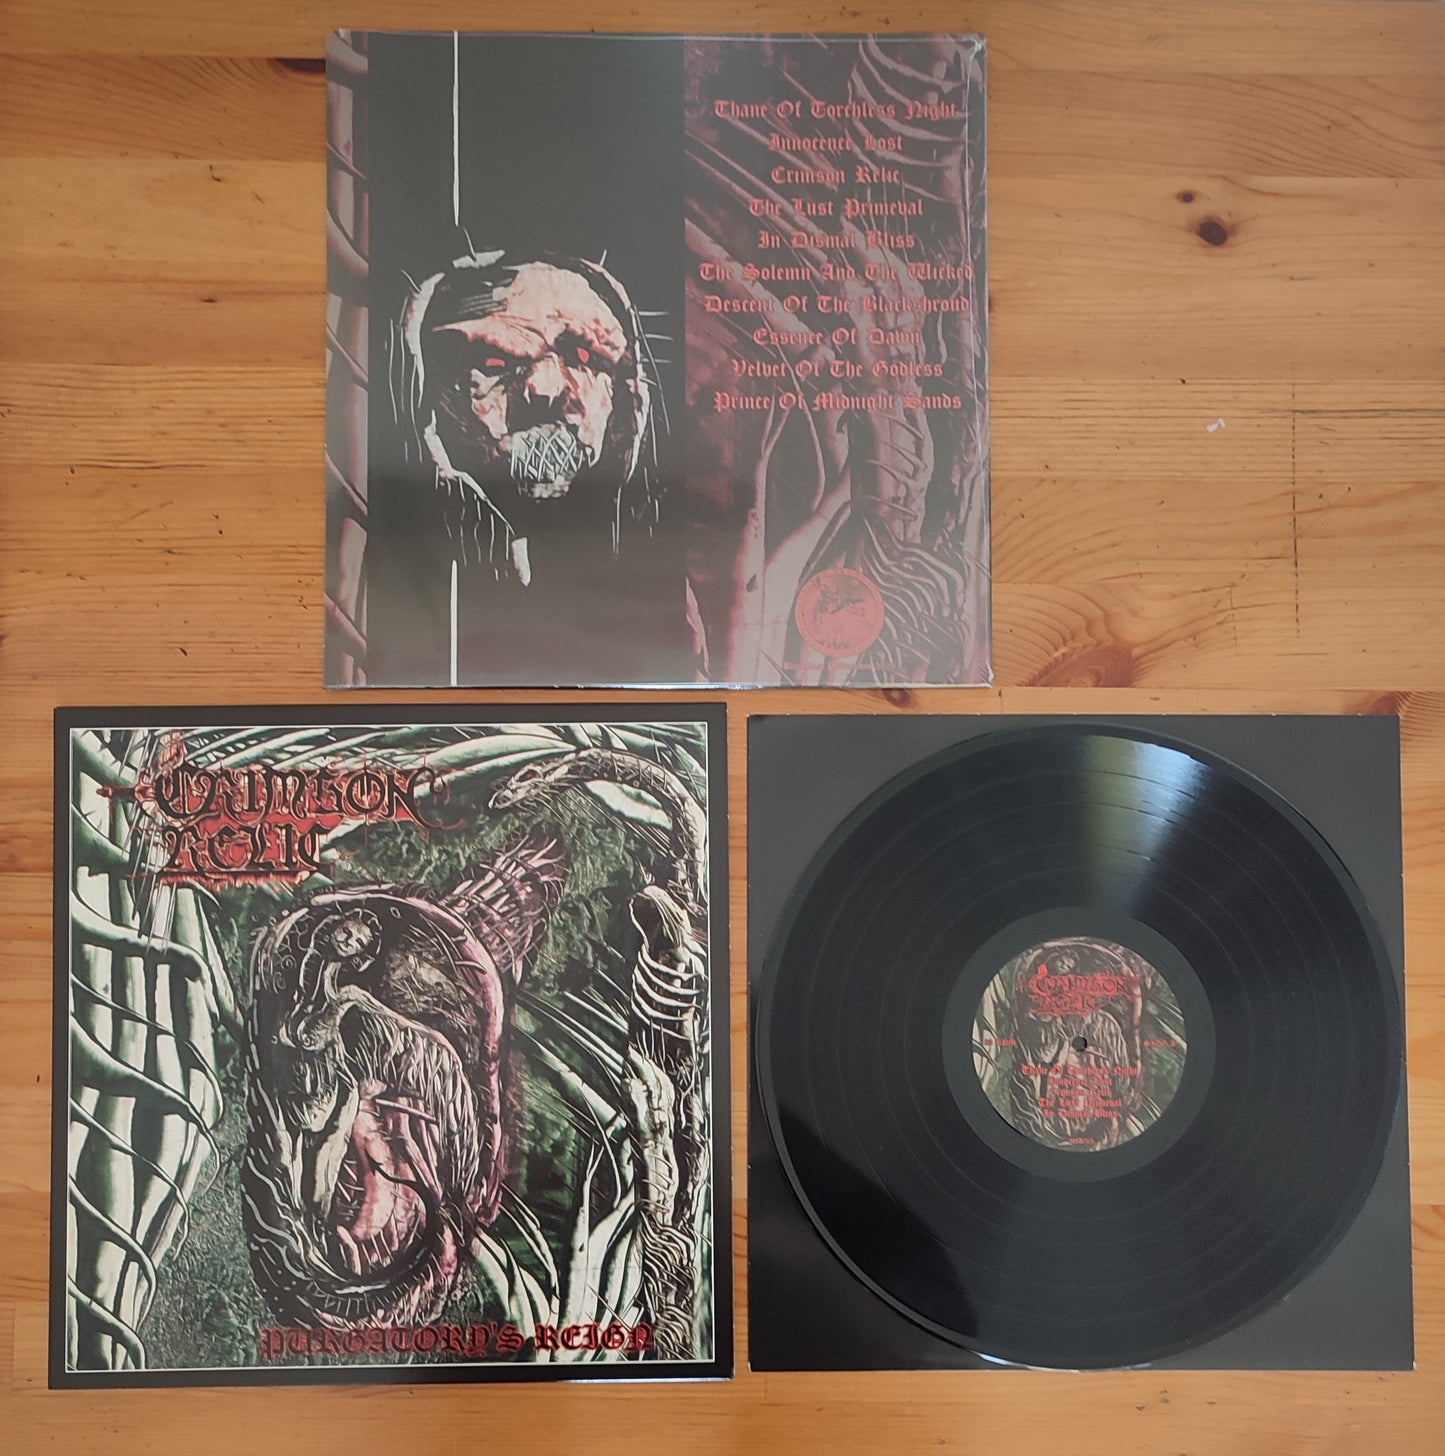 Crimson Relic (US) "Purgatory's Reign" - 12" LP *New in stock*